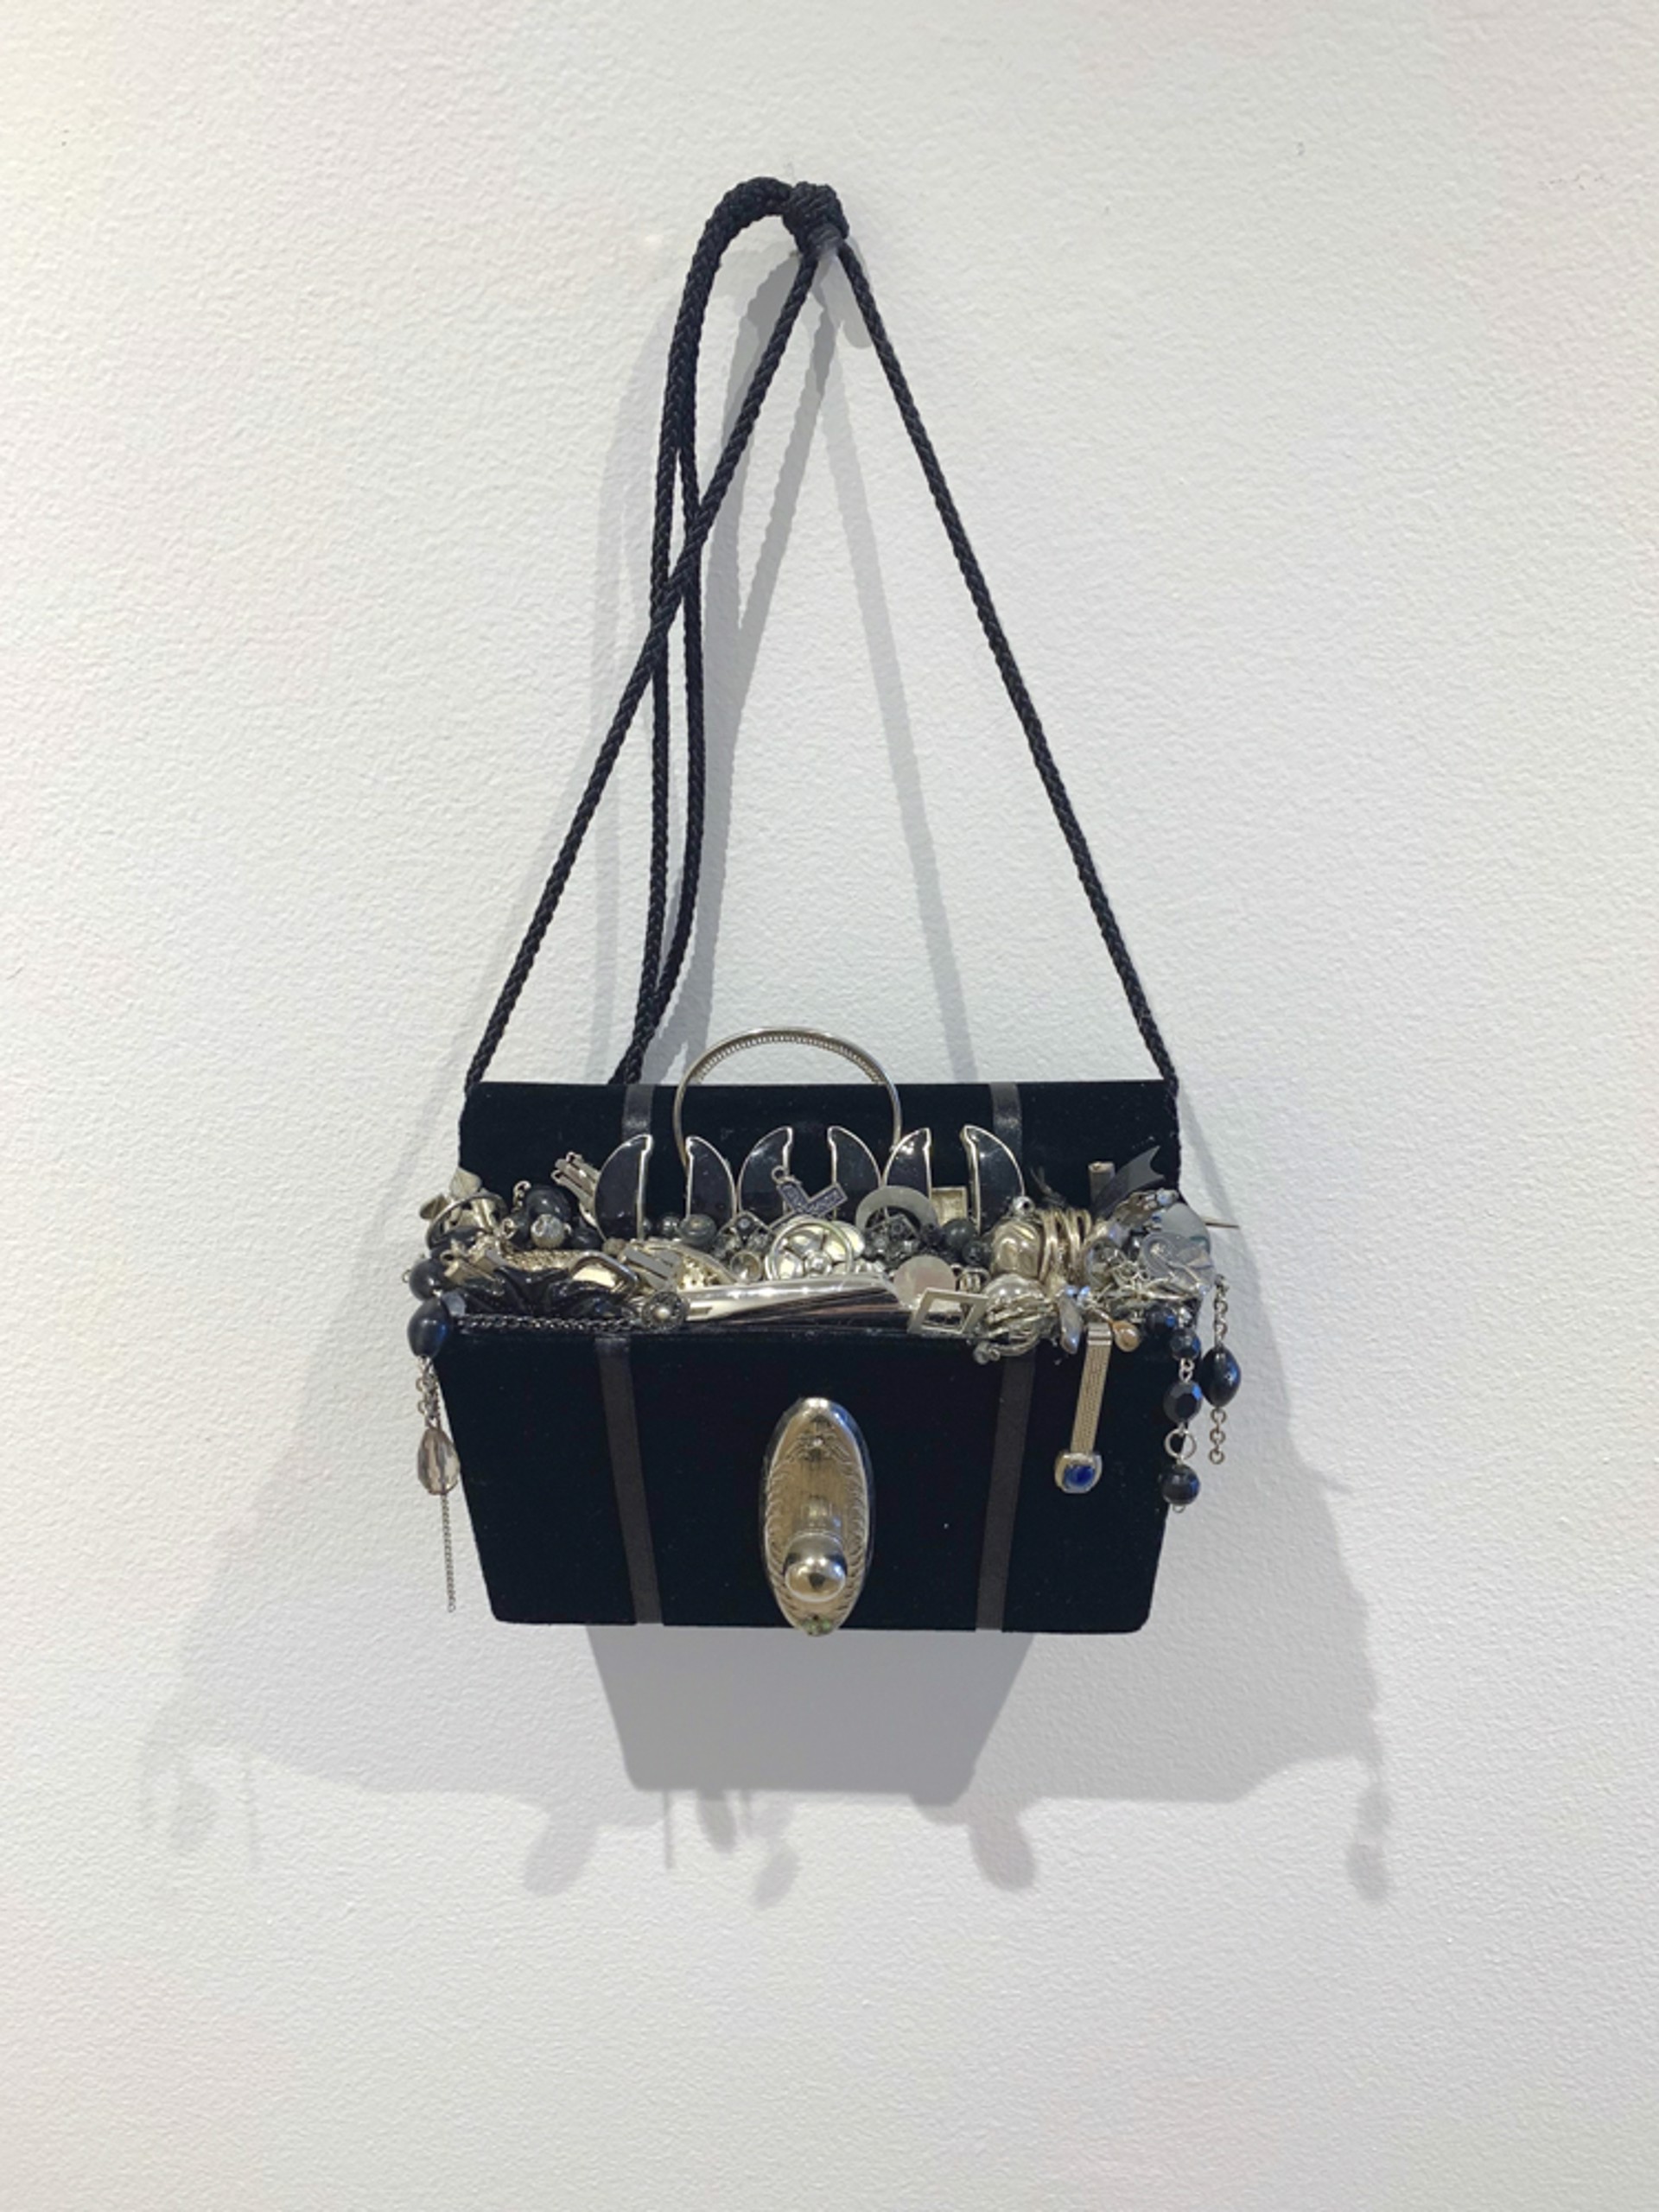 Bolo Bag by Monica Cioppettini